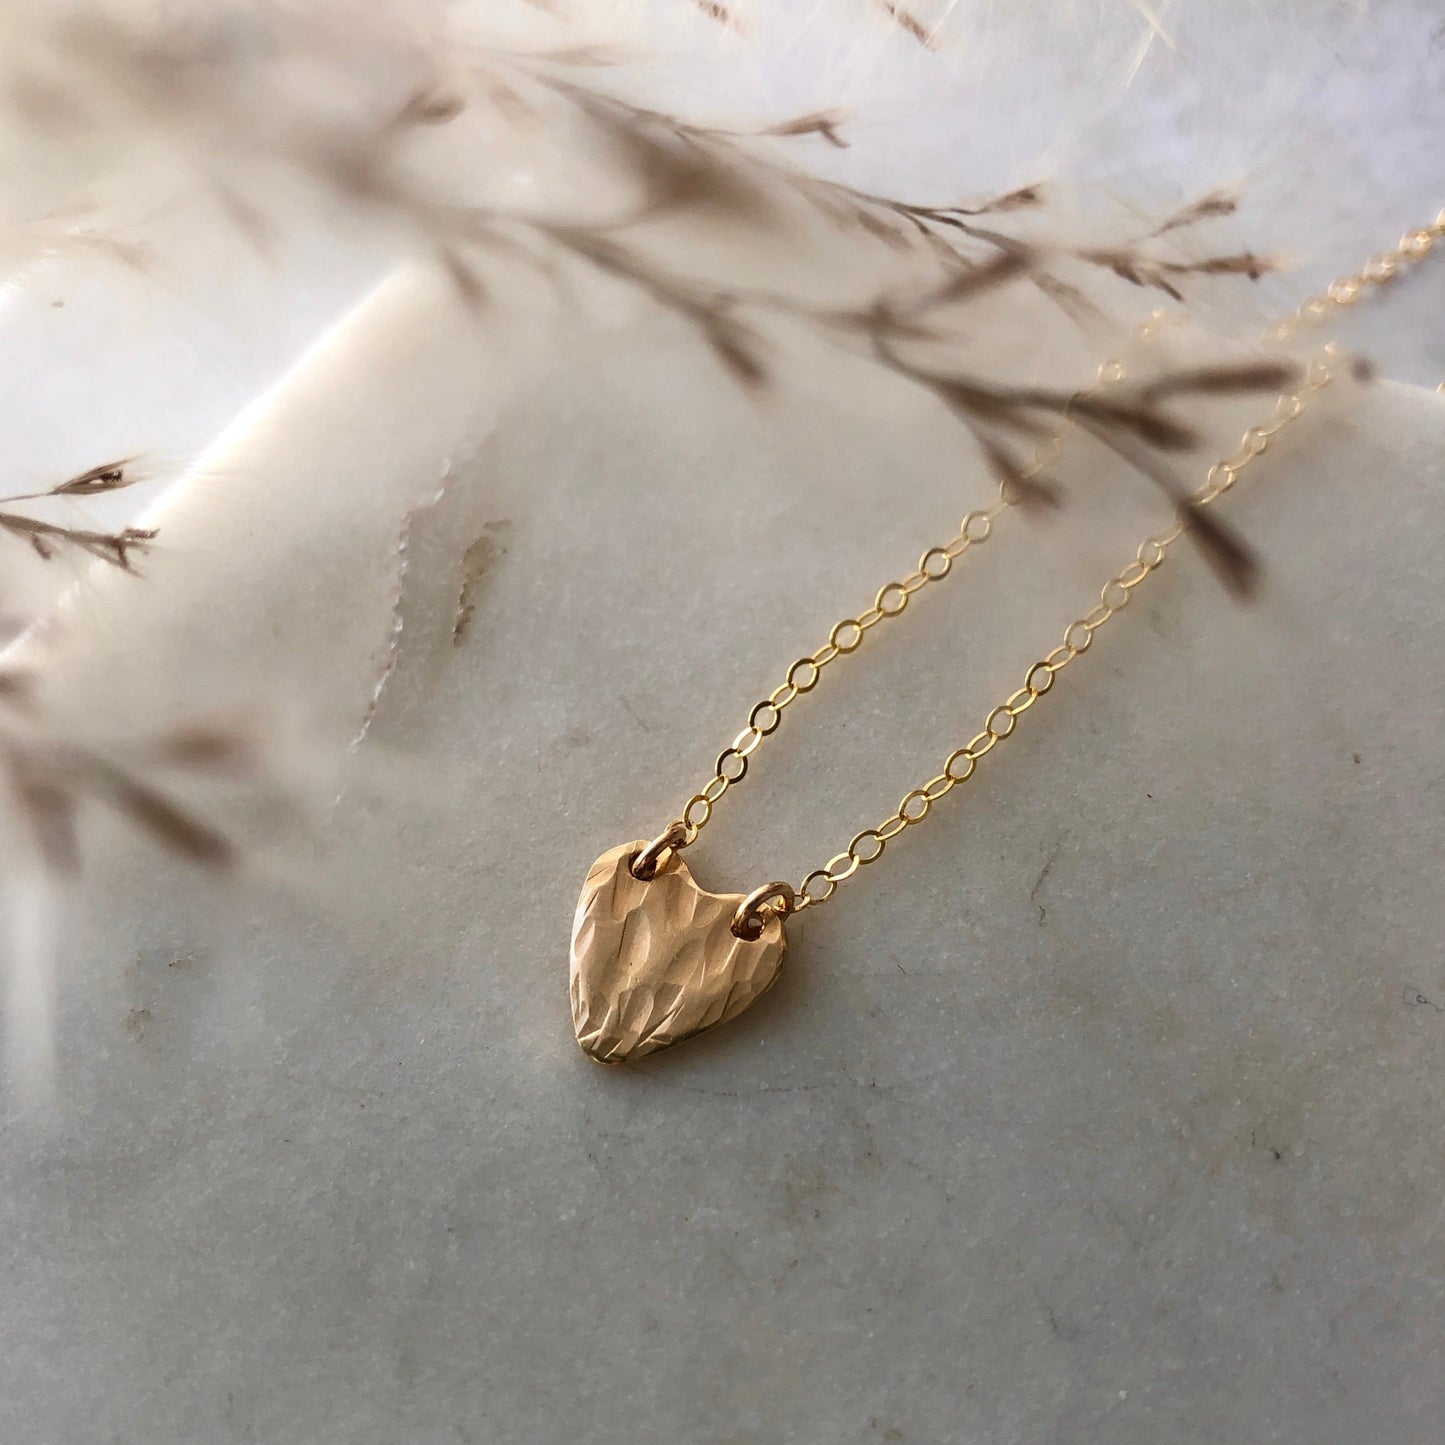 Full Heart Pendant Necklace